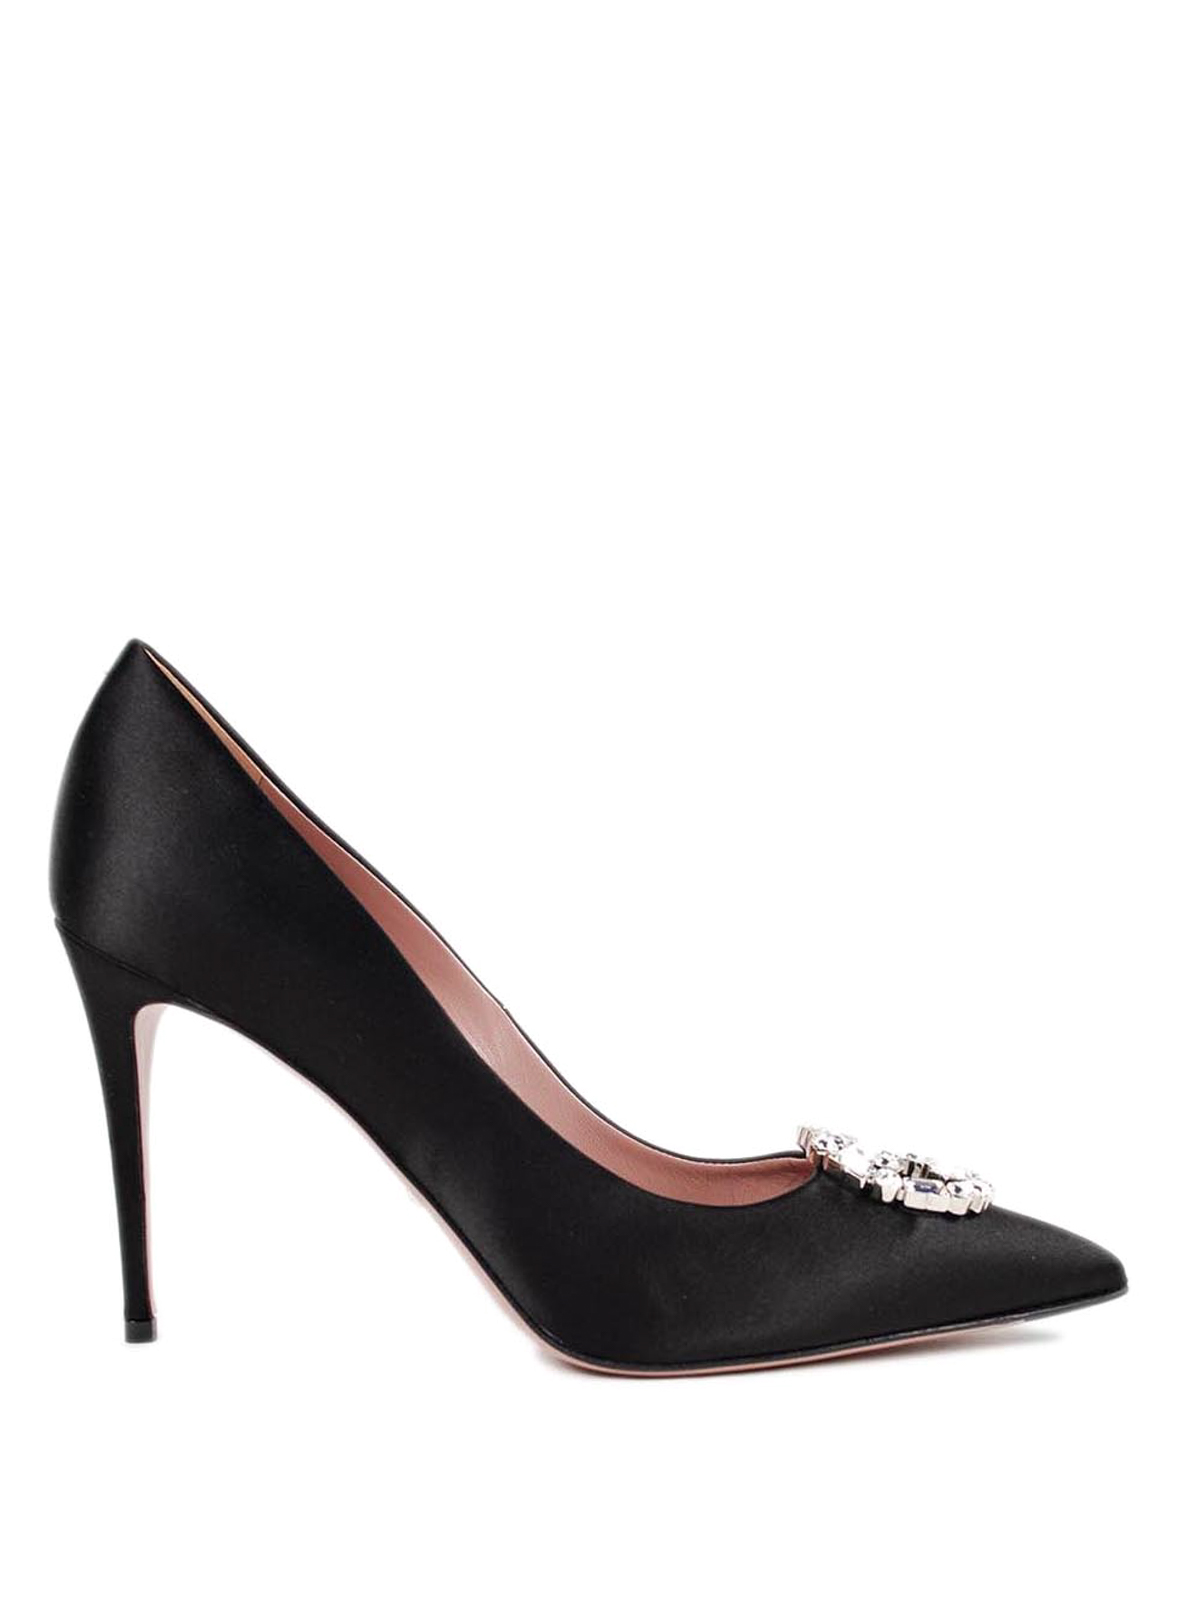 Gucci - Crystal satin pumps - court shoes - 388506F14001000 | iKRIX.com